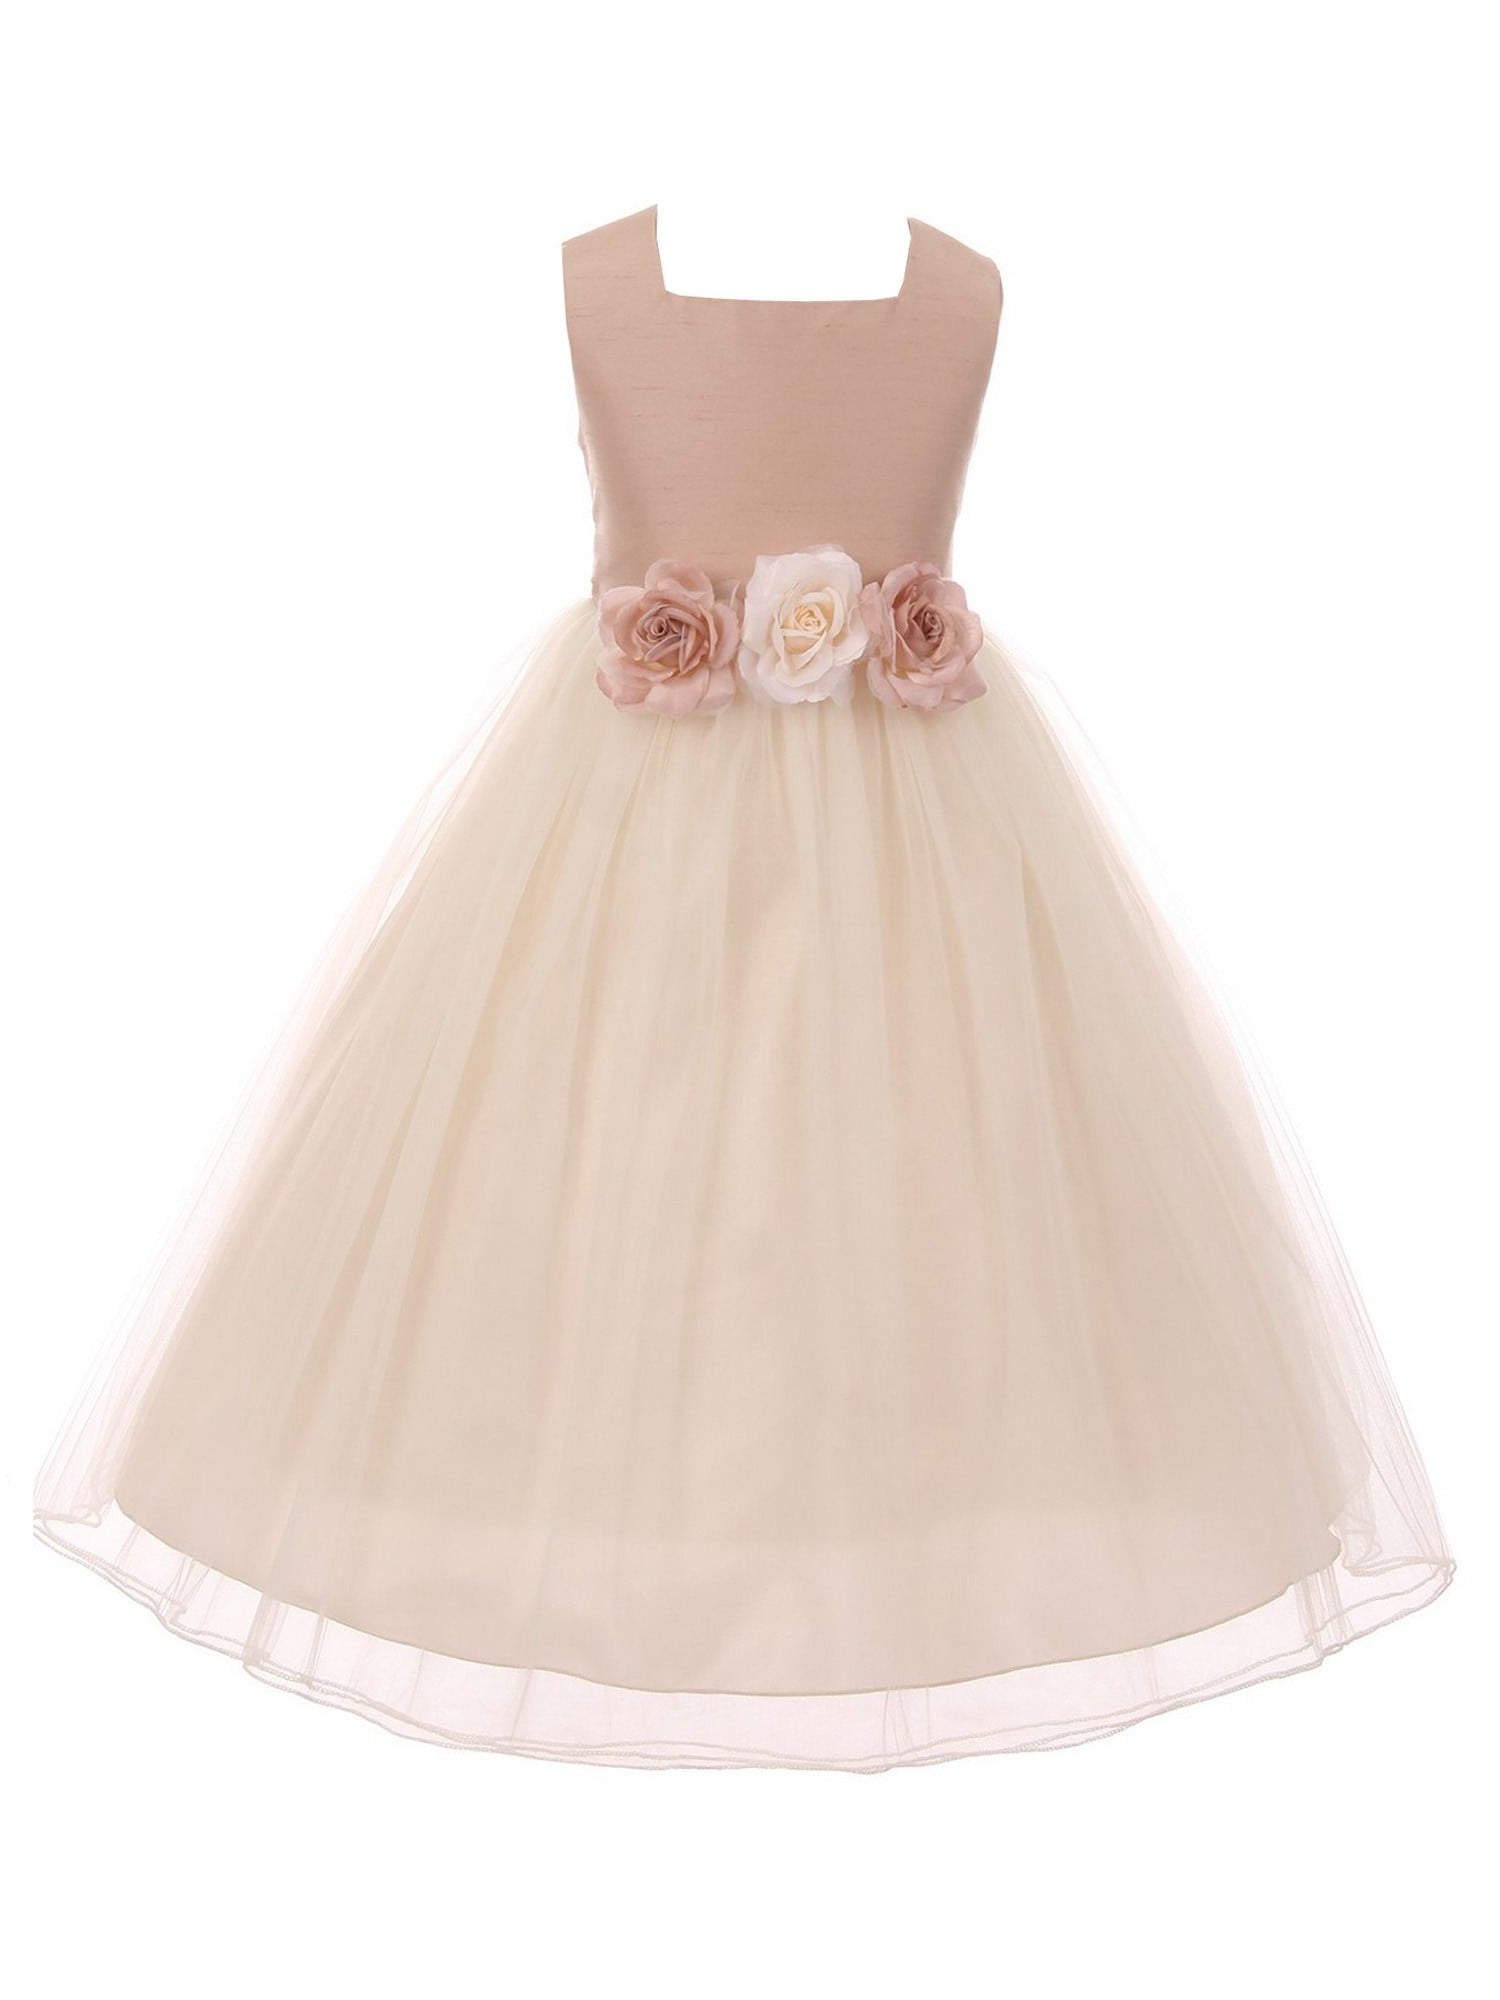 vintage rose flower girl dress